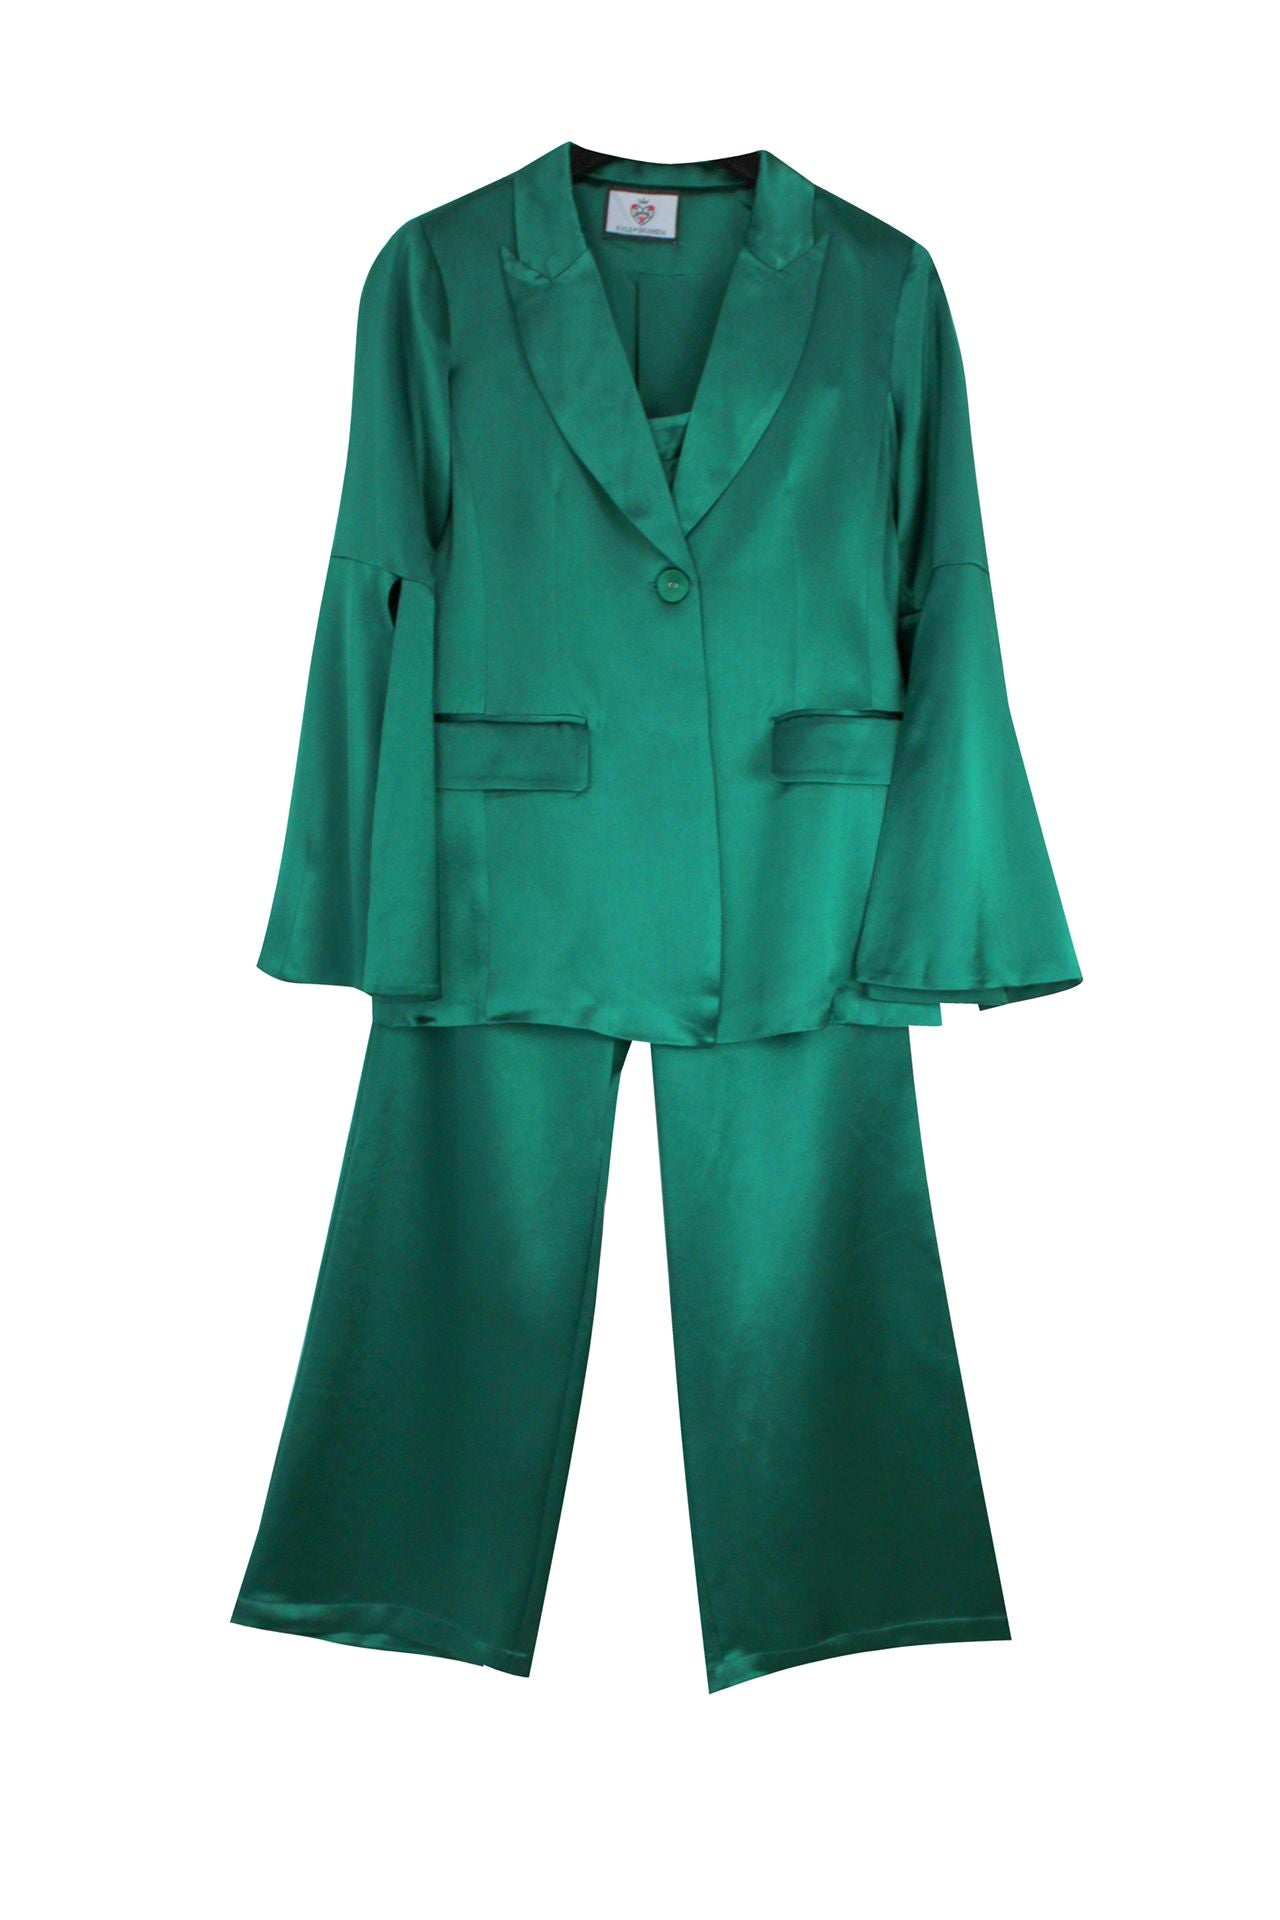 Women-Designer-Matching-Green-Suit-By-Kyle-Richard